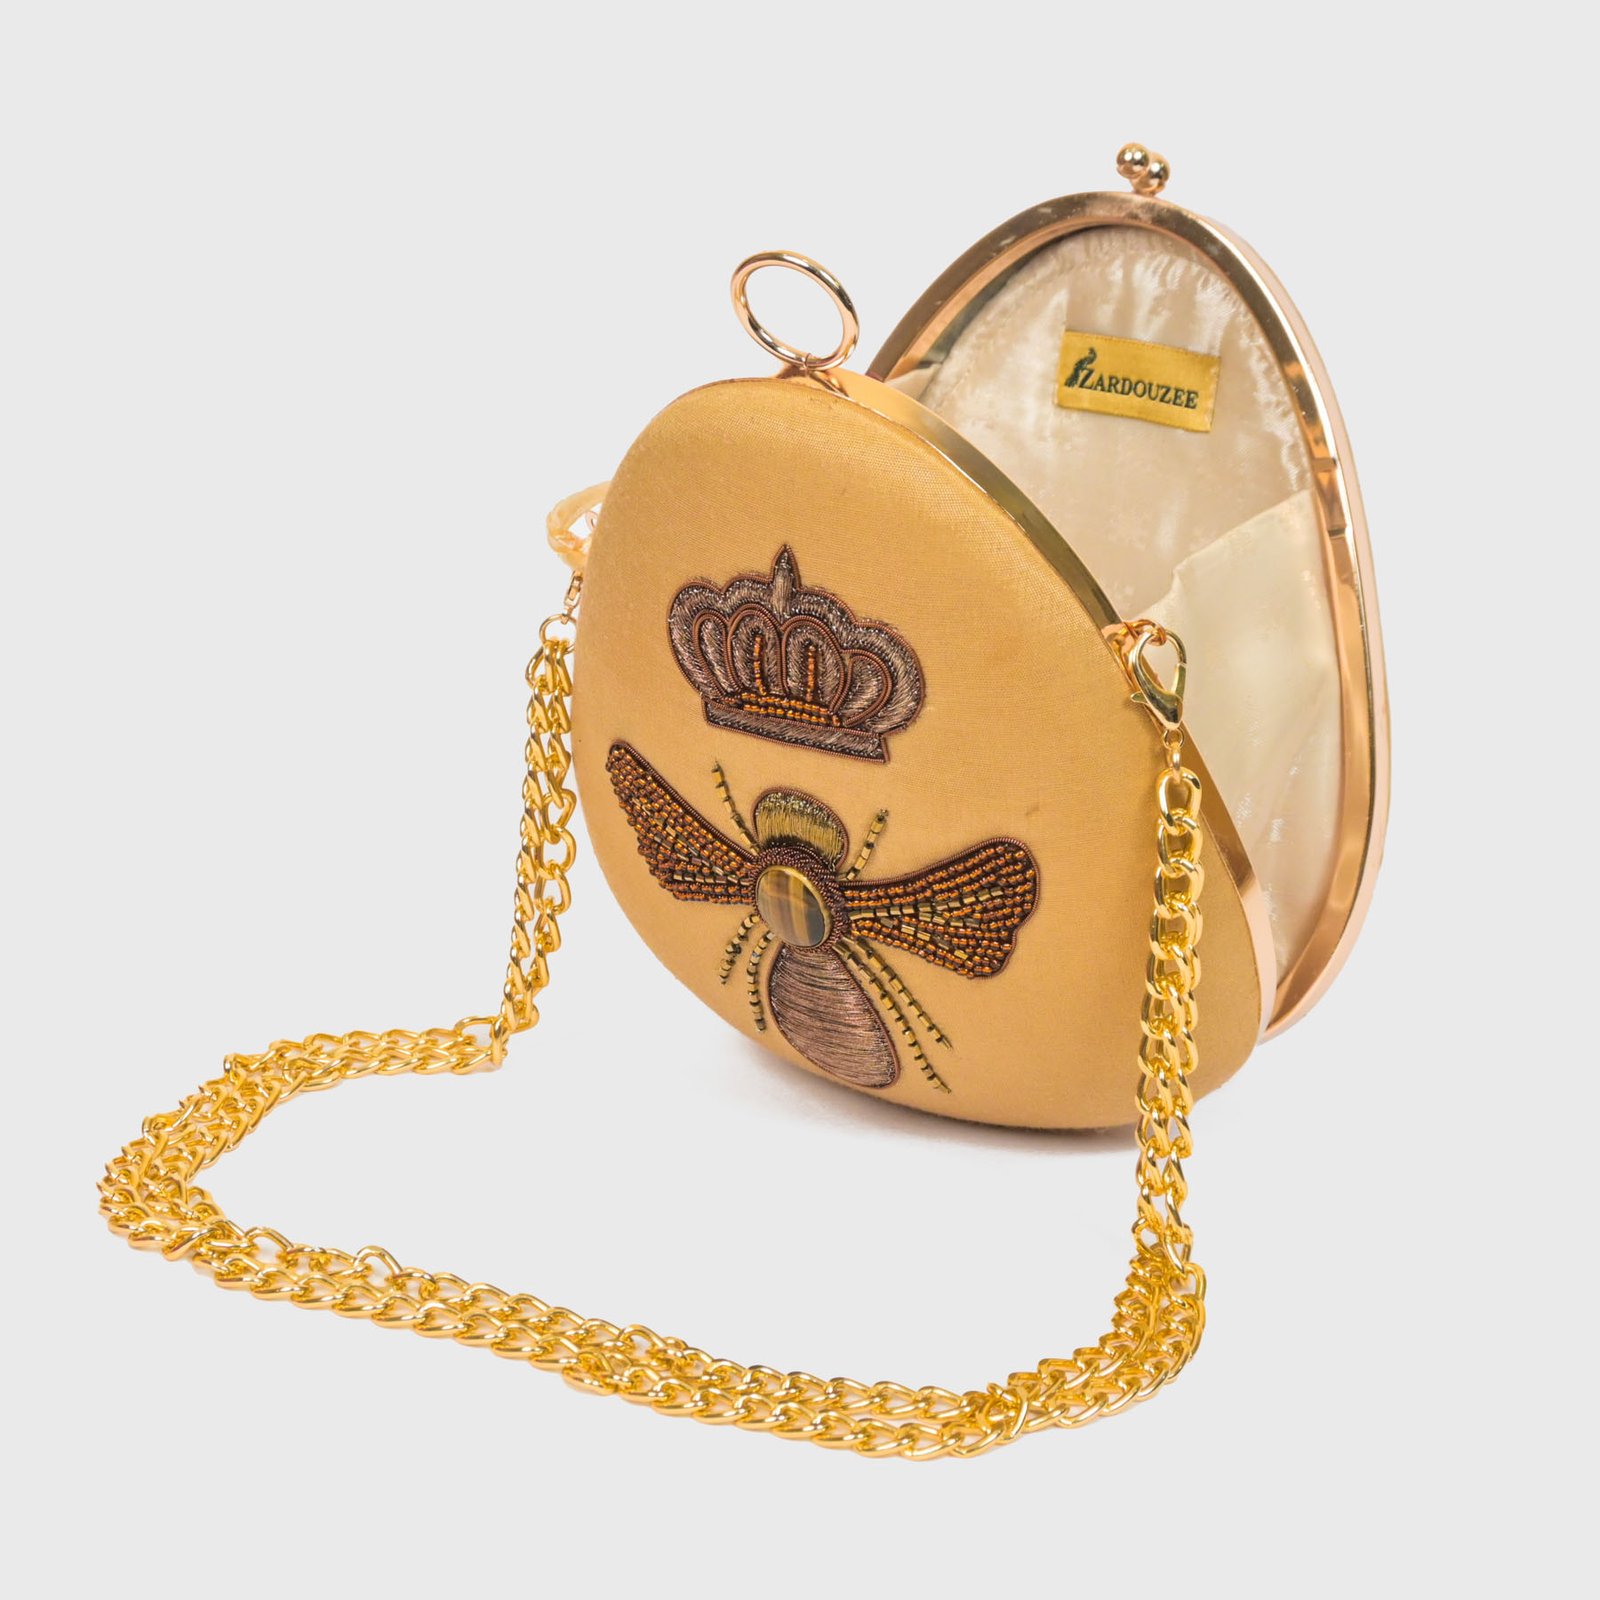 Women's handbag leather clutch. Indian Leather Purse. Indian, Handmade –  Artikrti